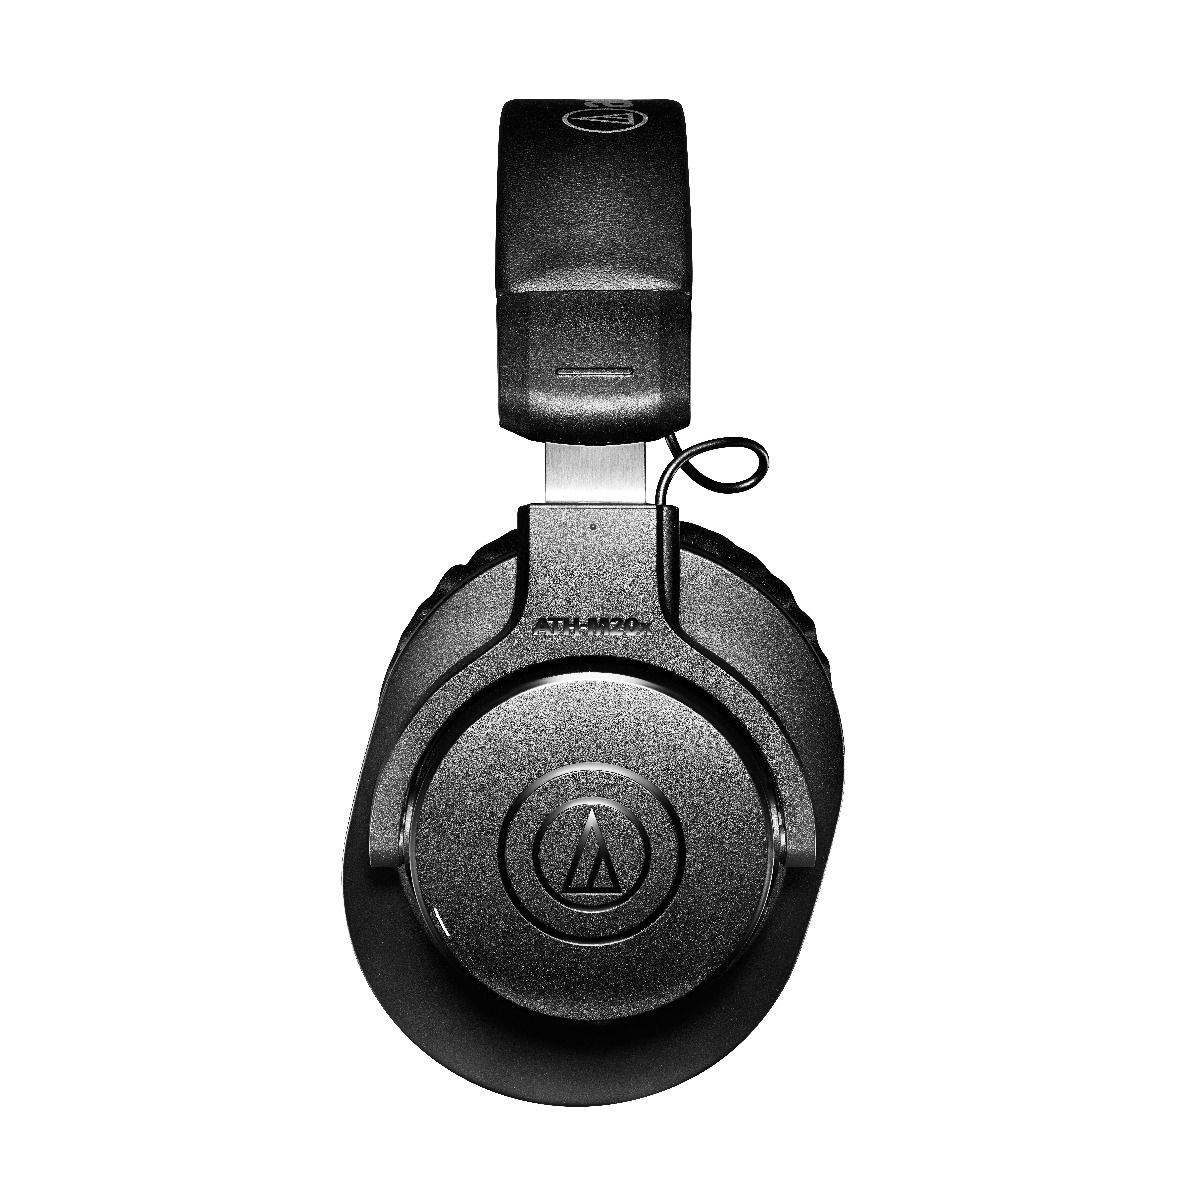  Audio-Technica ATH-M30x Professional Studio Monitor Headphones,  Black : Audio-Technica: Everything Else